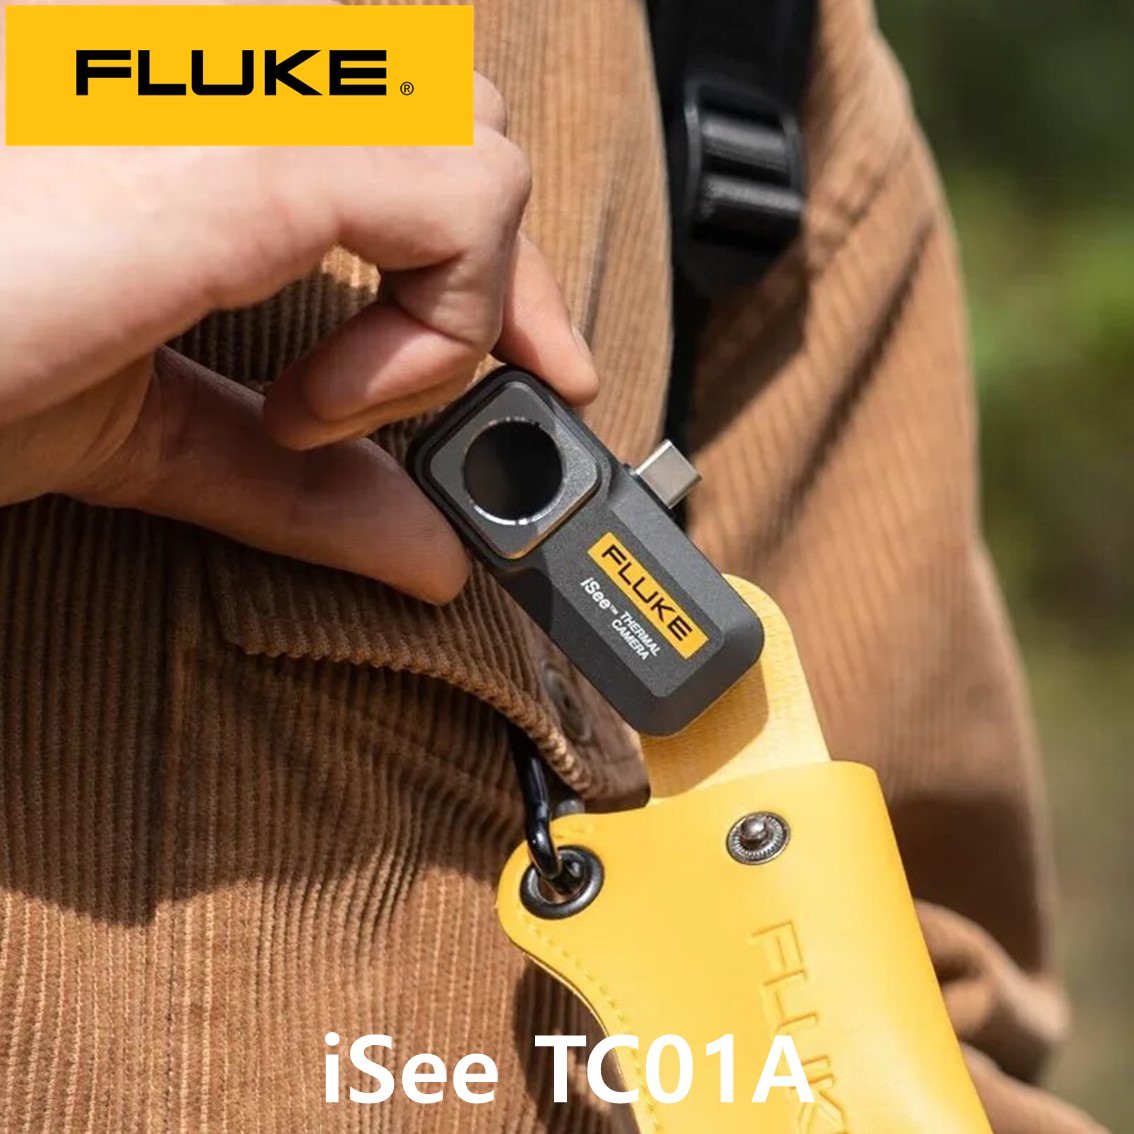 [ Fluke iSee ] 플루크 열화상 카메라, 휴대폰 열화상카메라 TC01A (-10~550℃)